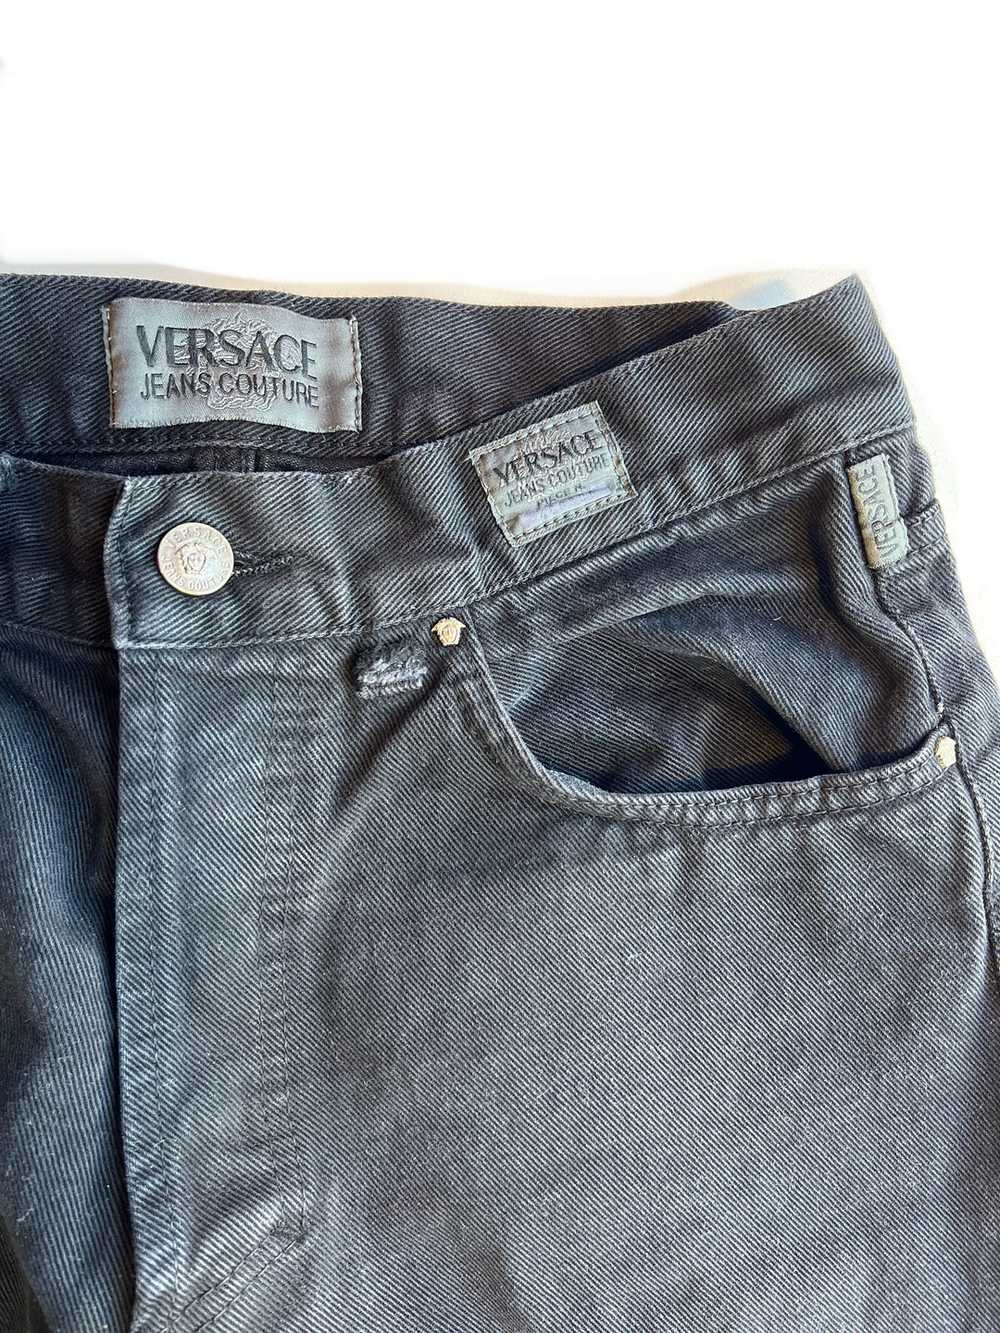 Vintage Versace Couture Jeans - image 3